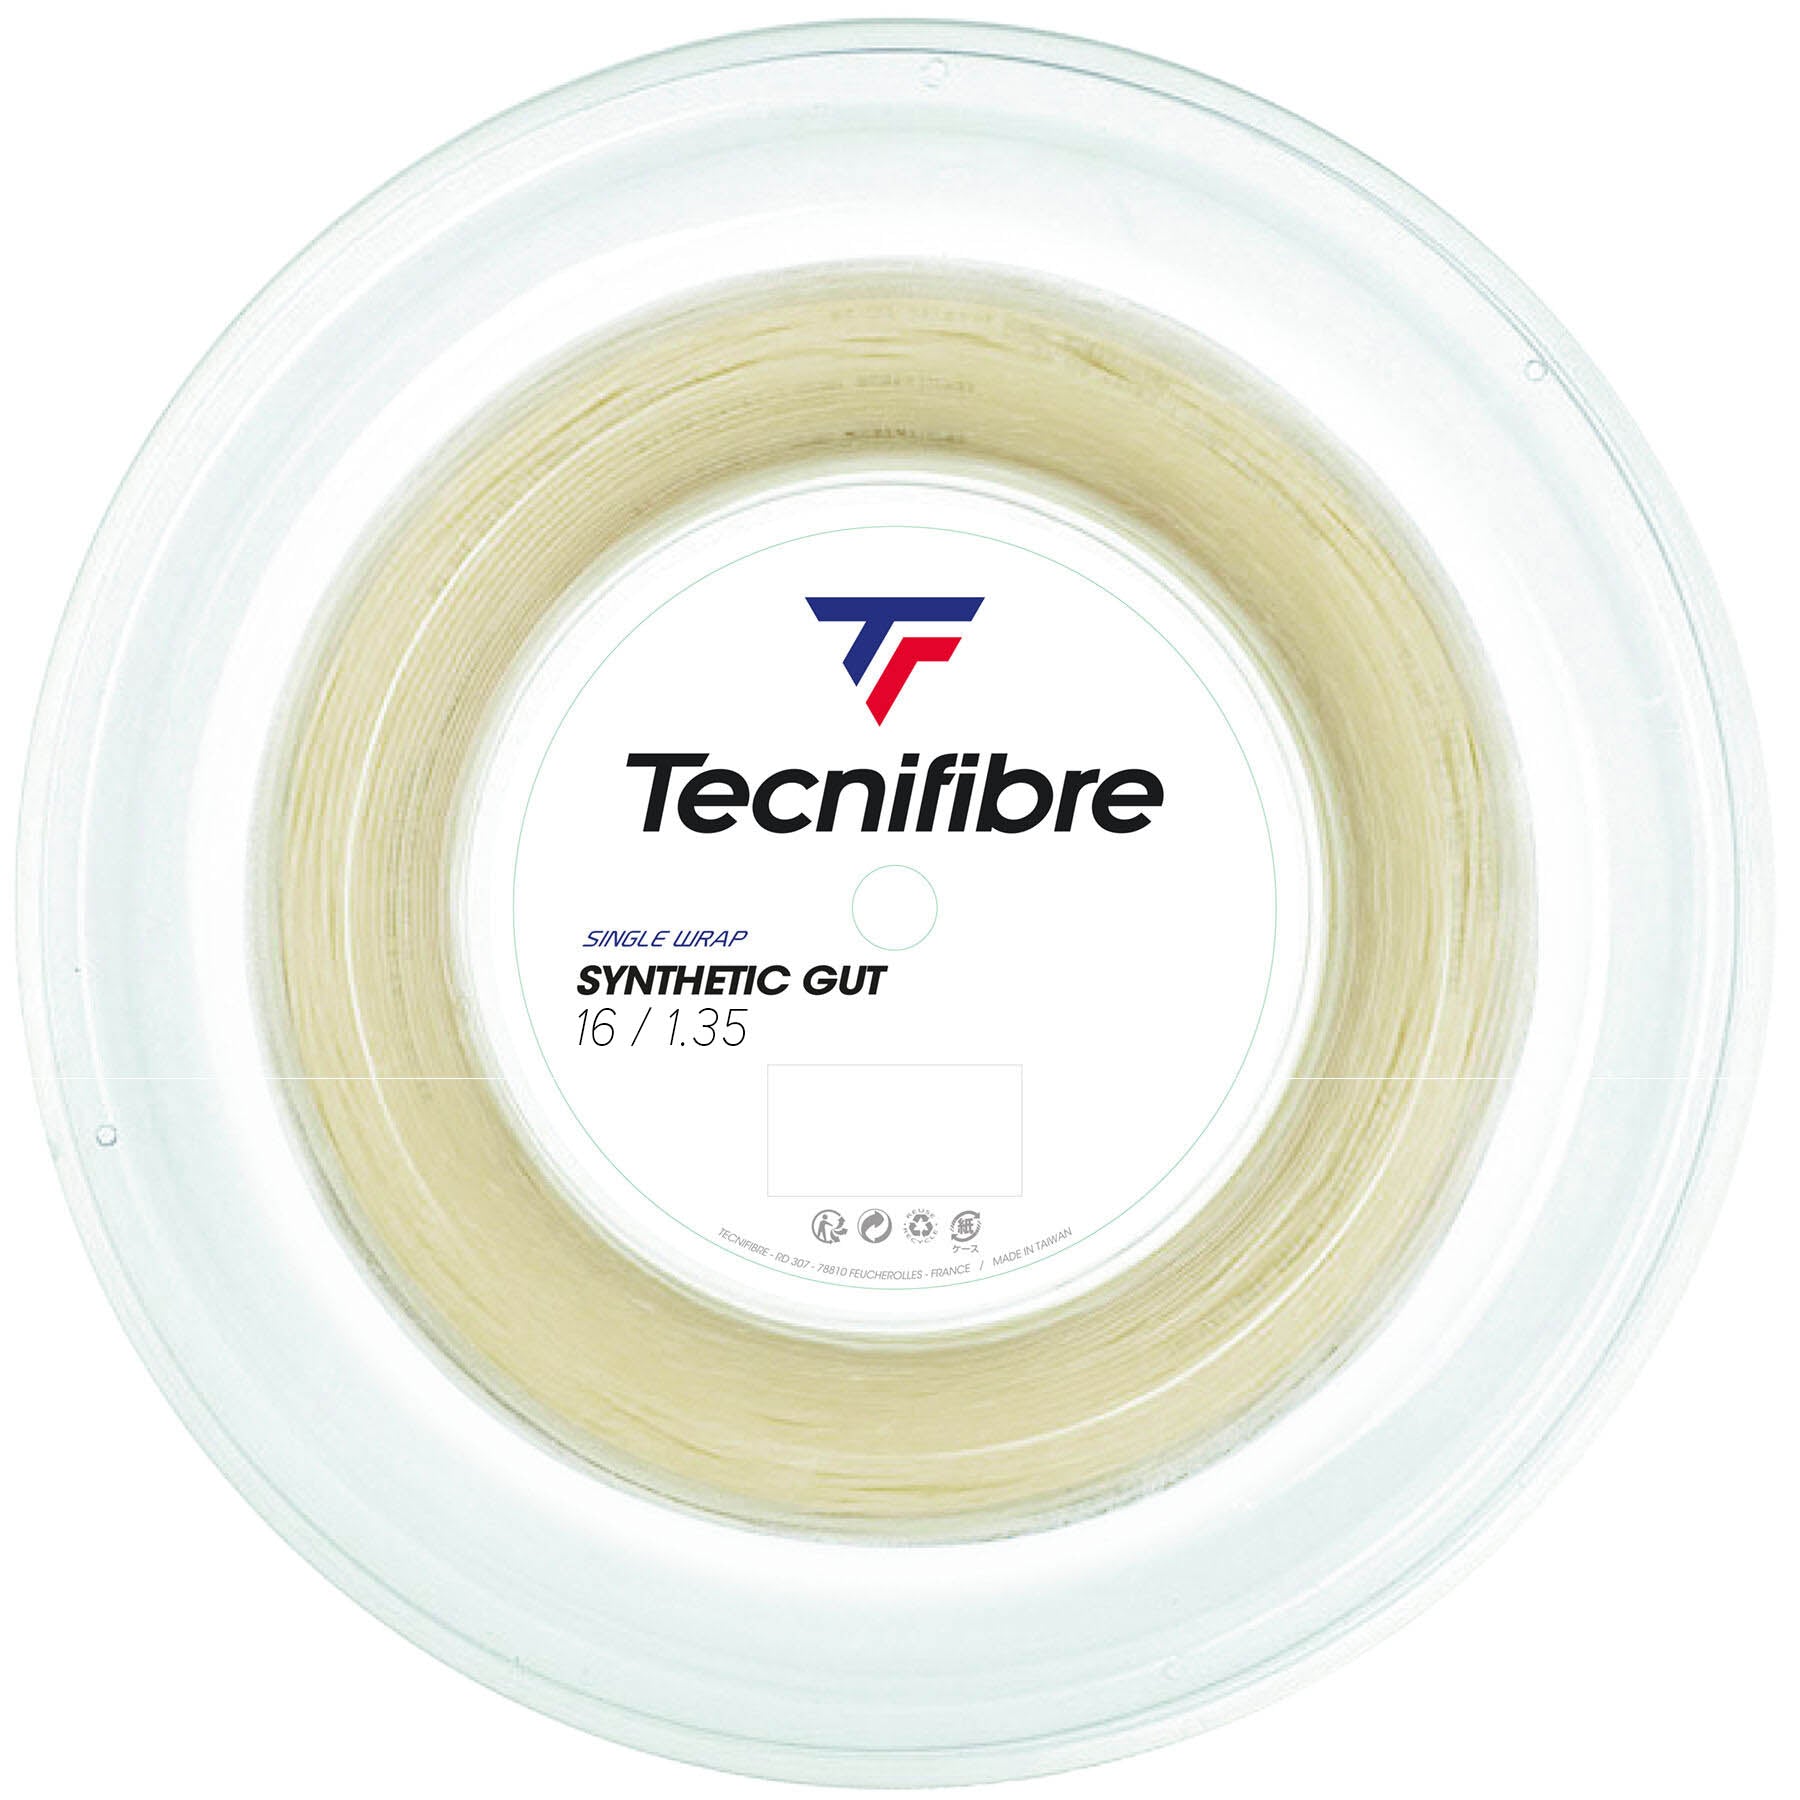 Tecnifibre Synthetic Gut Tennis String - 200m Reel – Sweatband